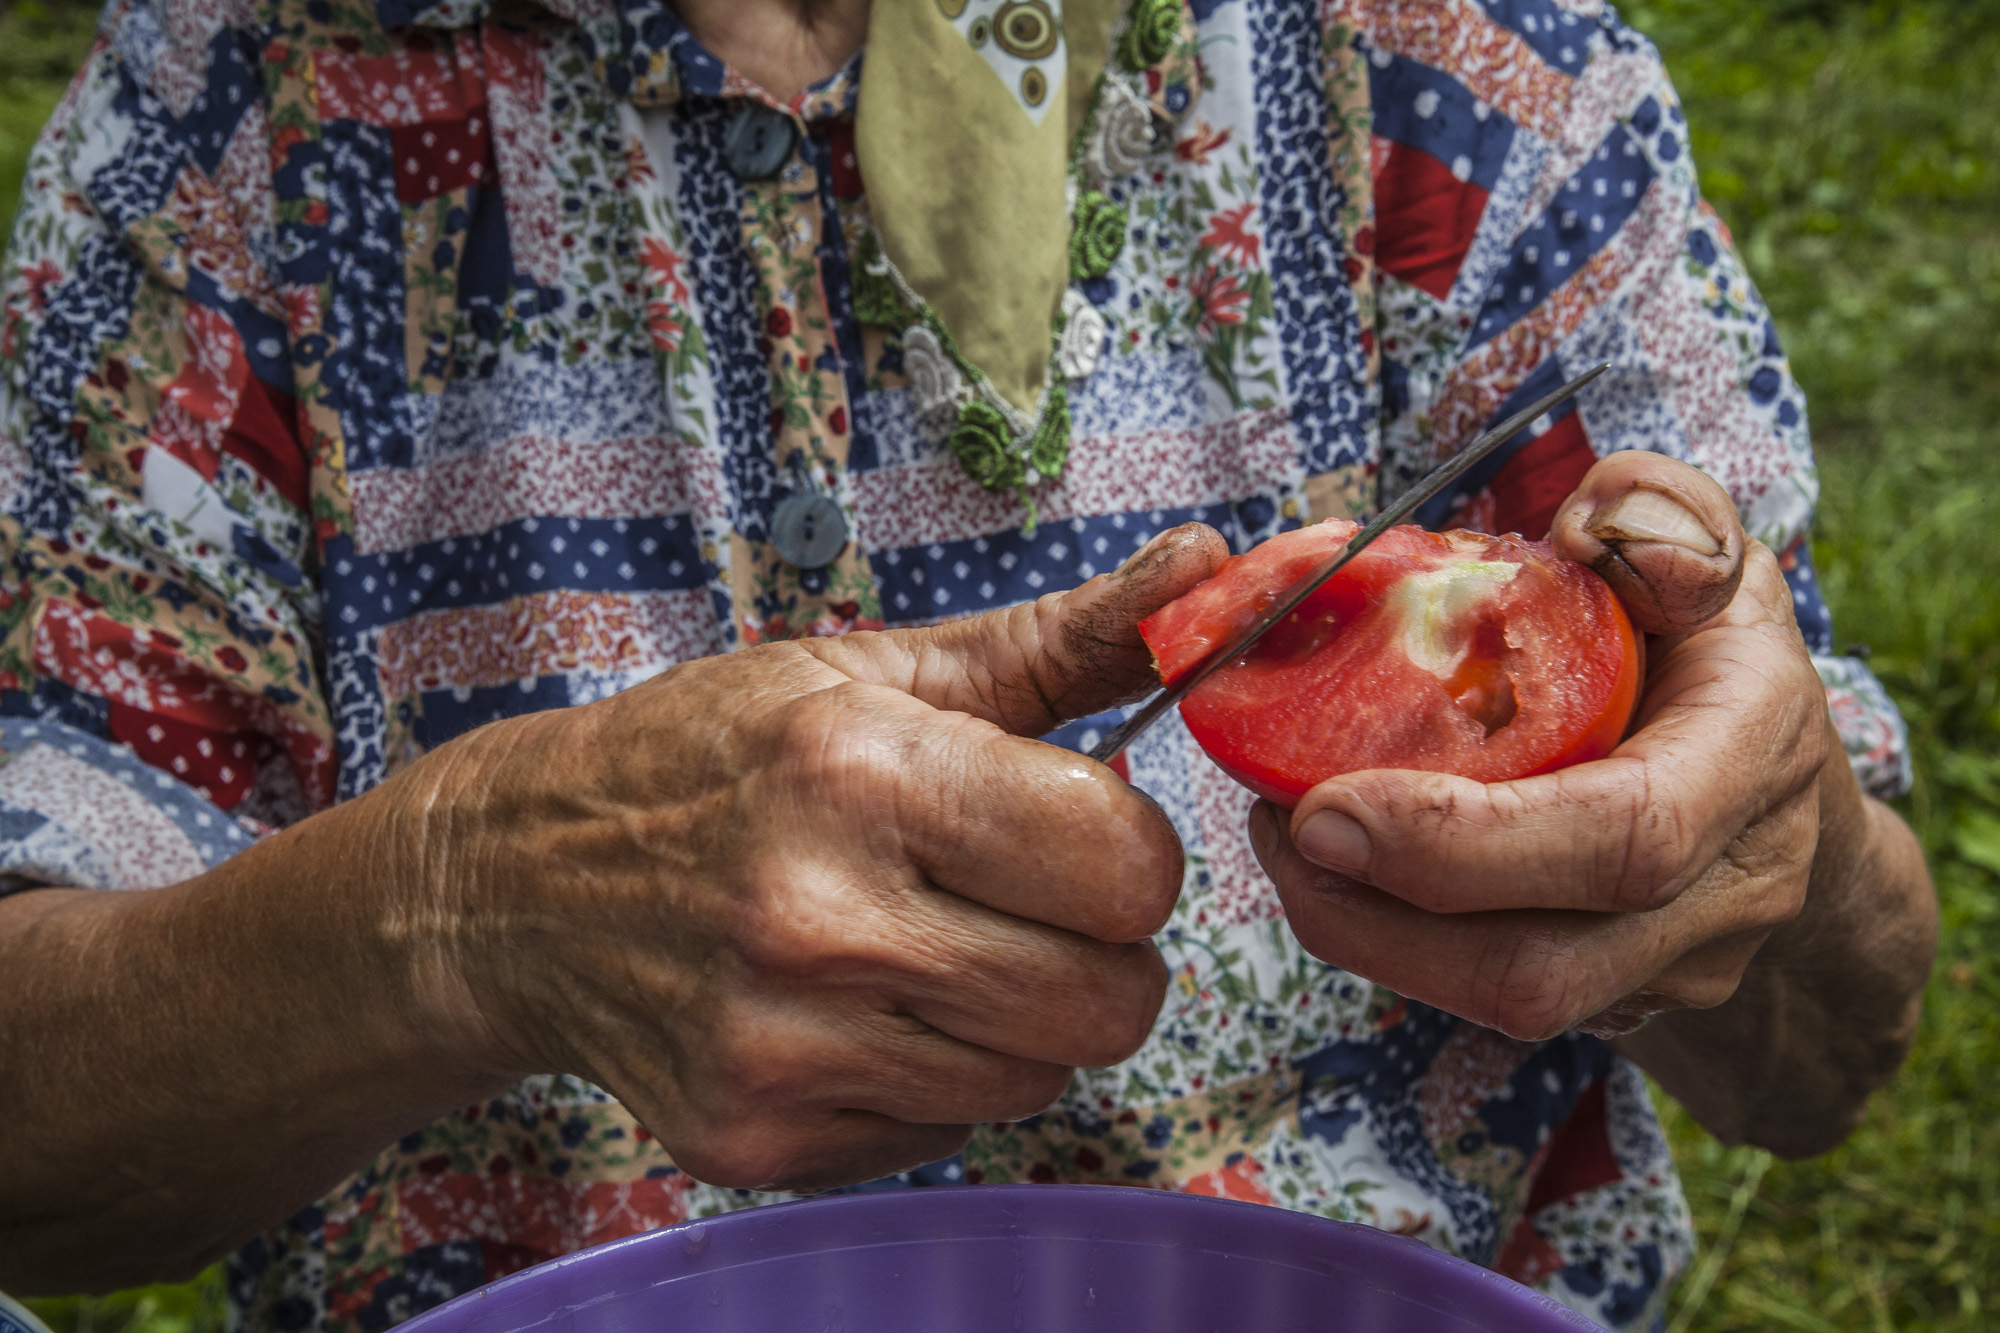 11. Medjulla, widowed farmer, cutting tomatoes